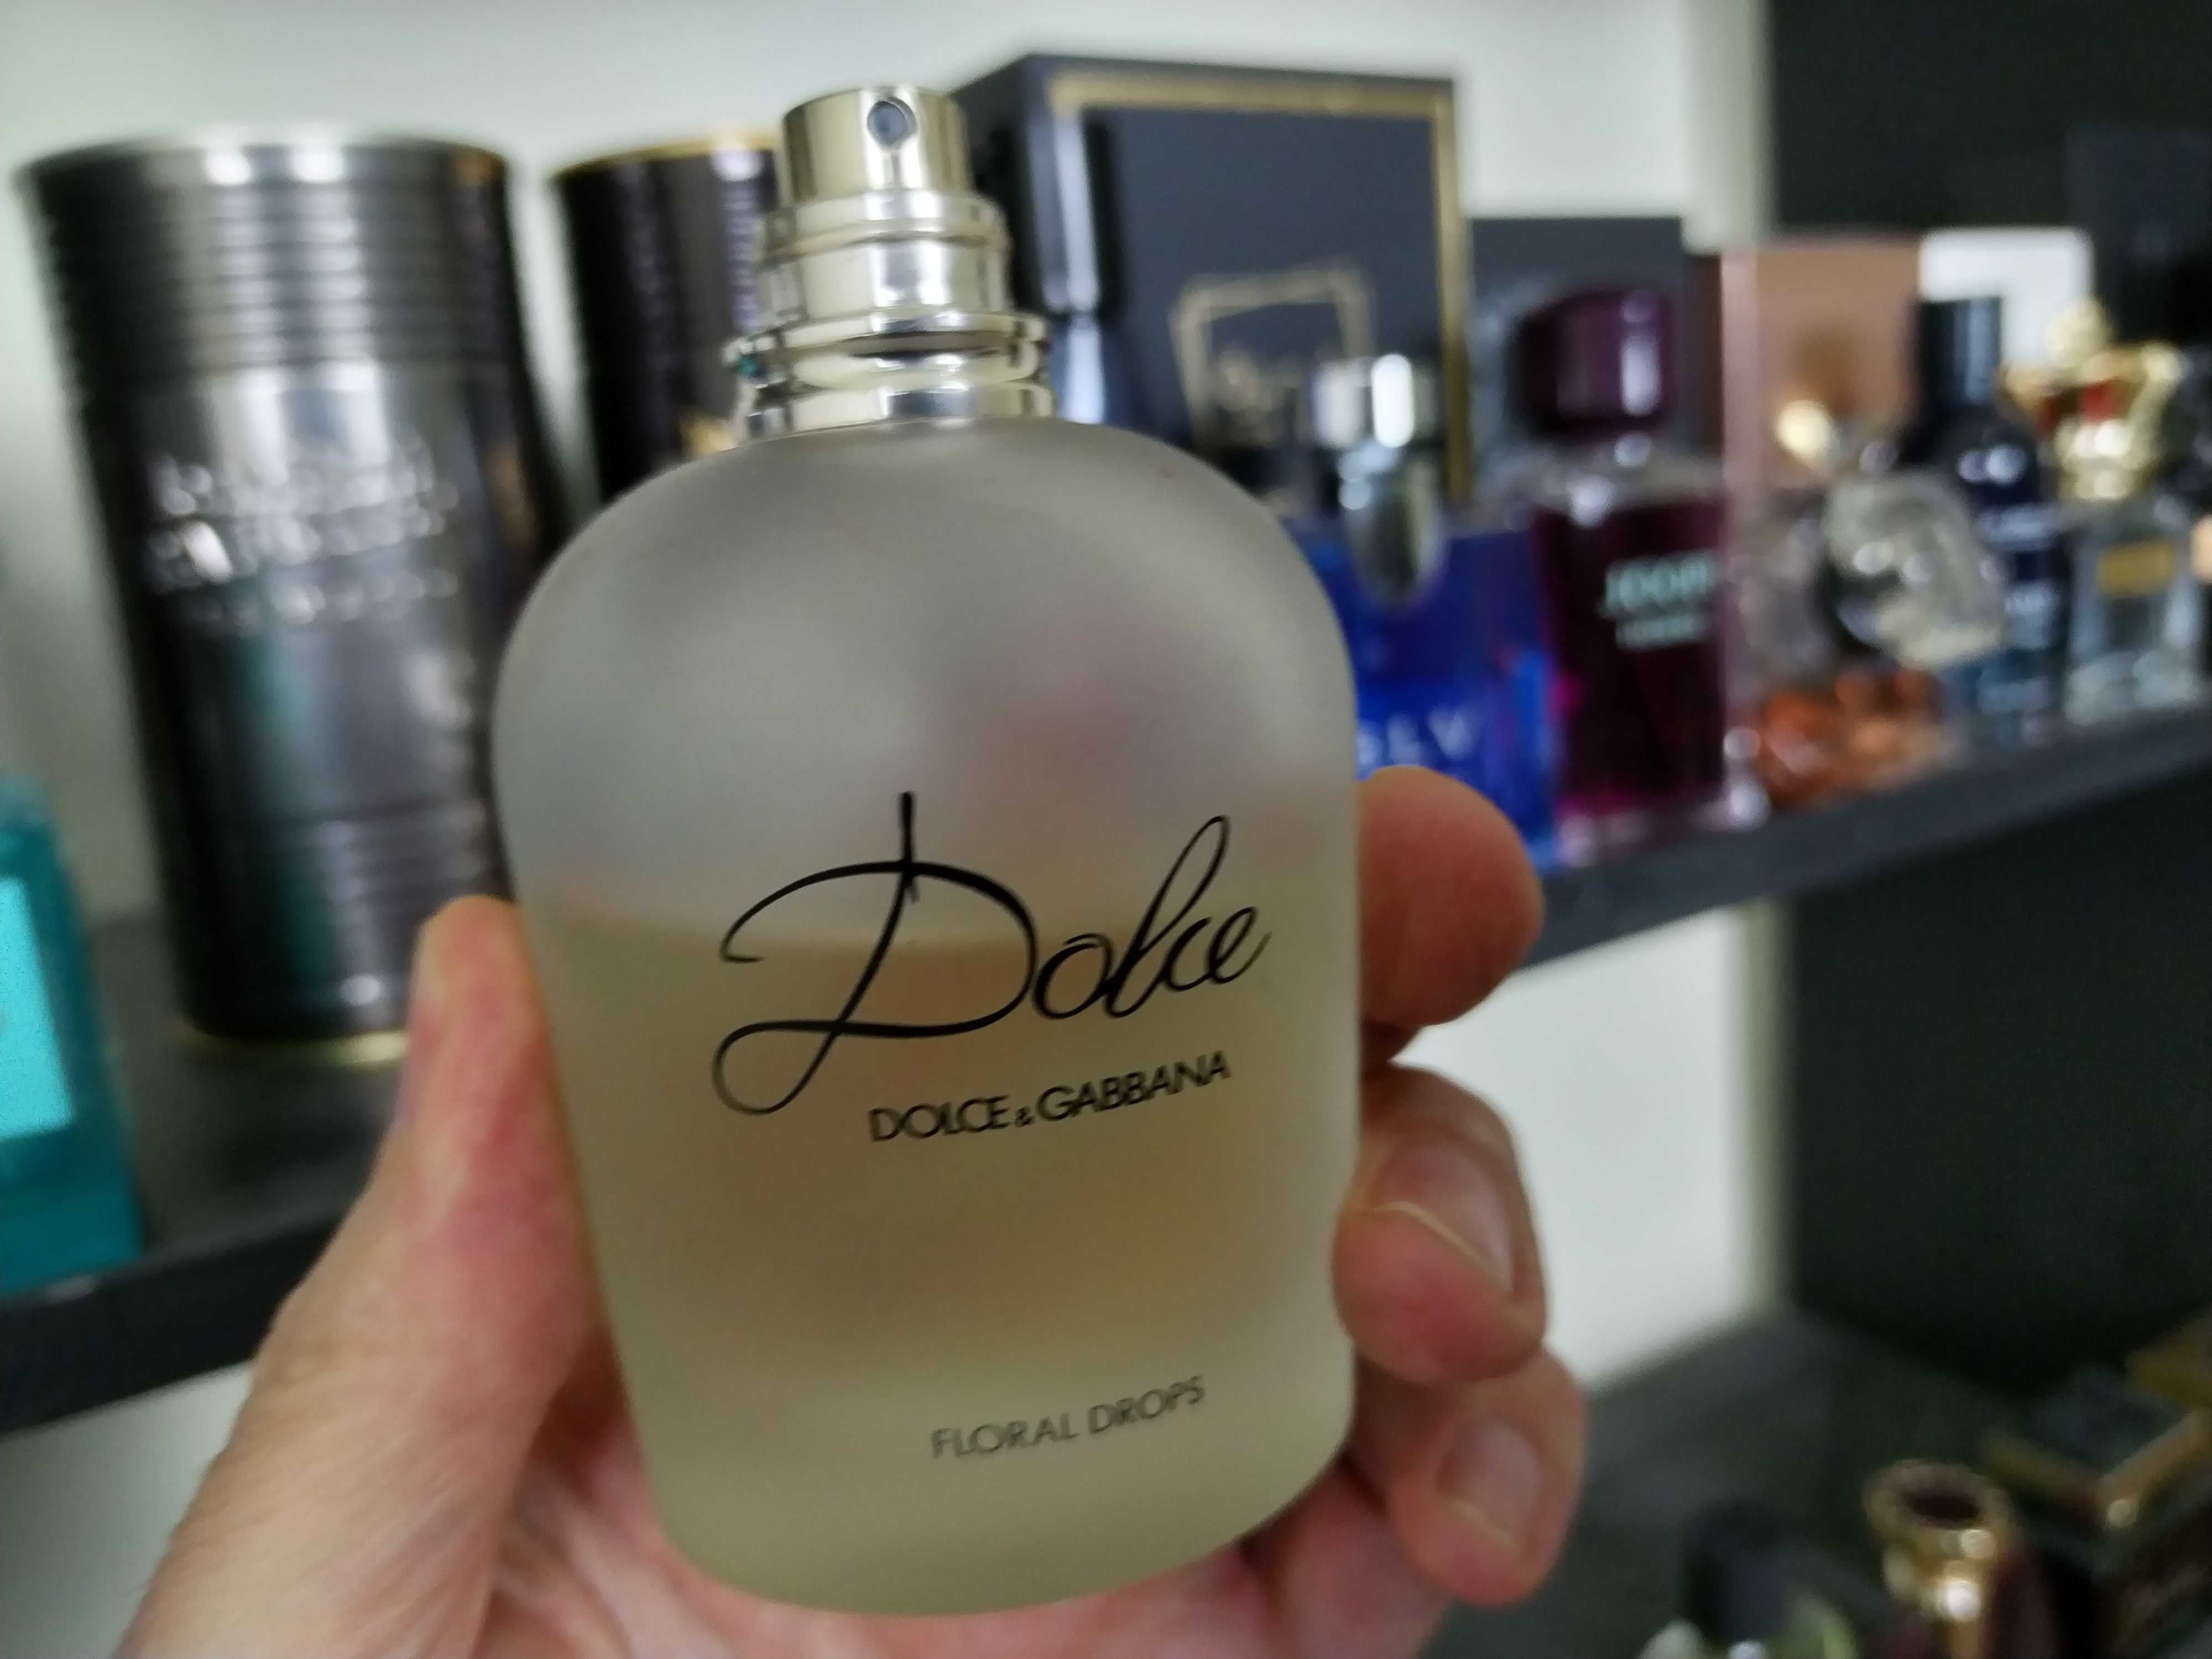 Dolce & Gabbana - Dolce Floral Drops Apa de Toaleta 75 ml ORIGINAL